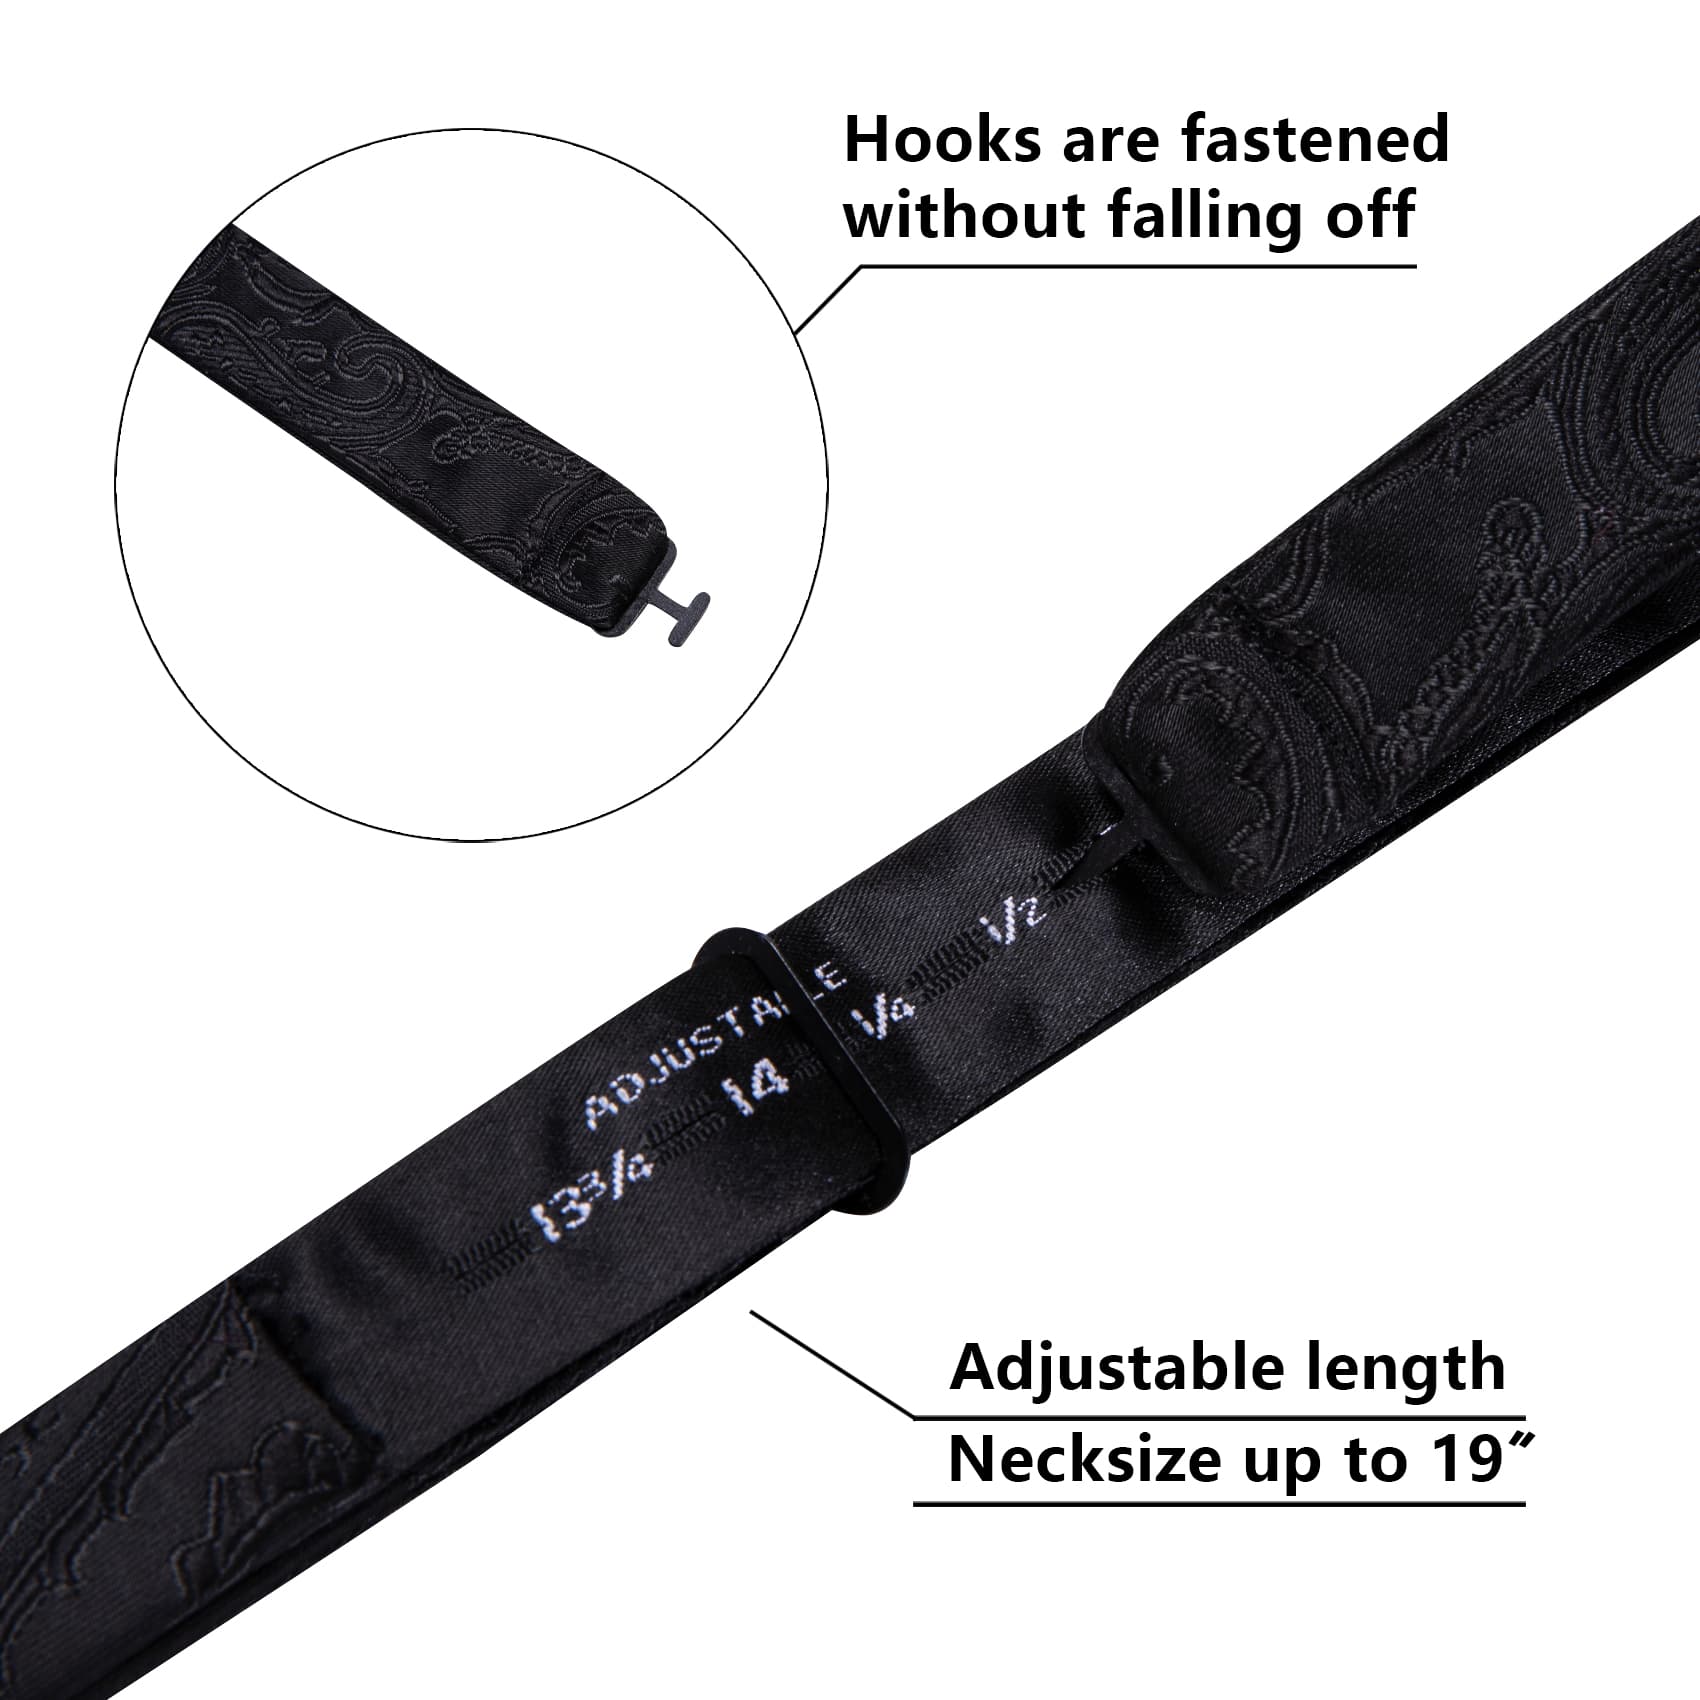 Adjustable length bowtie